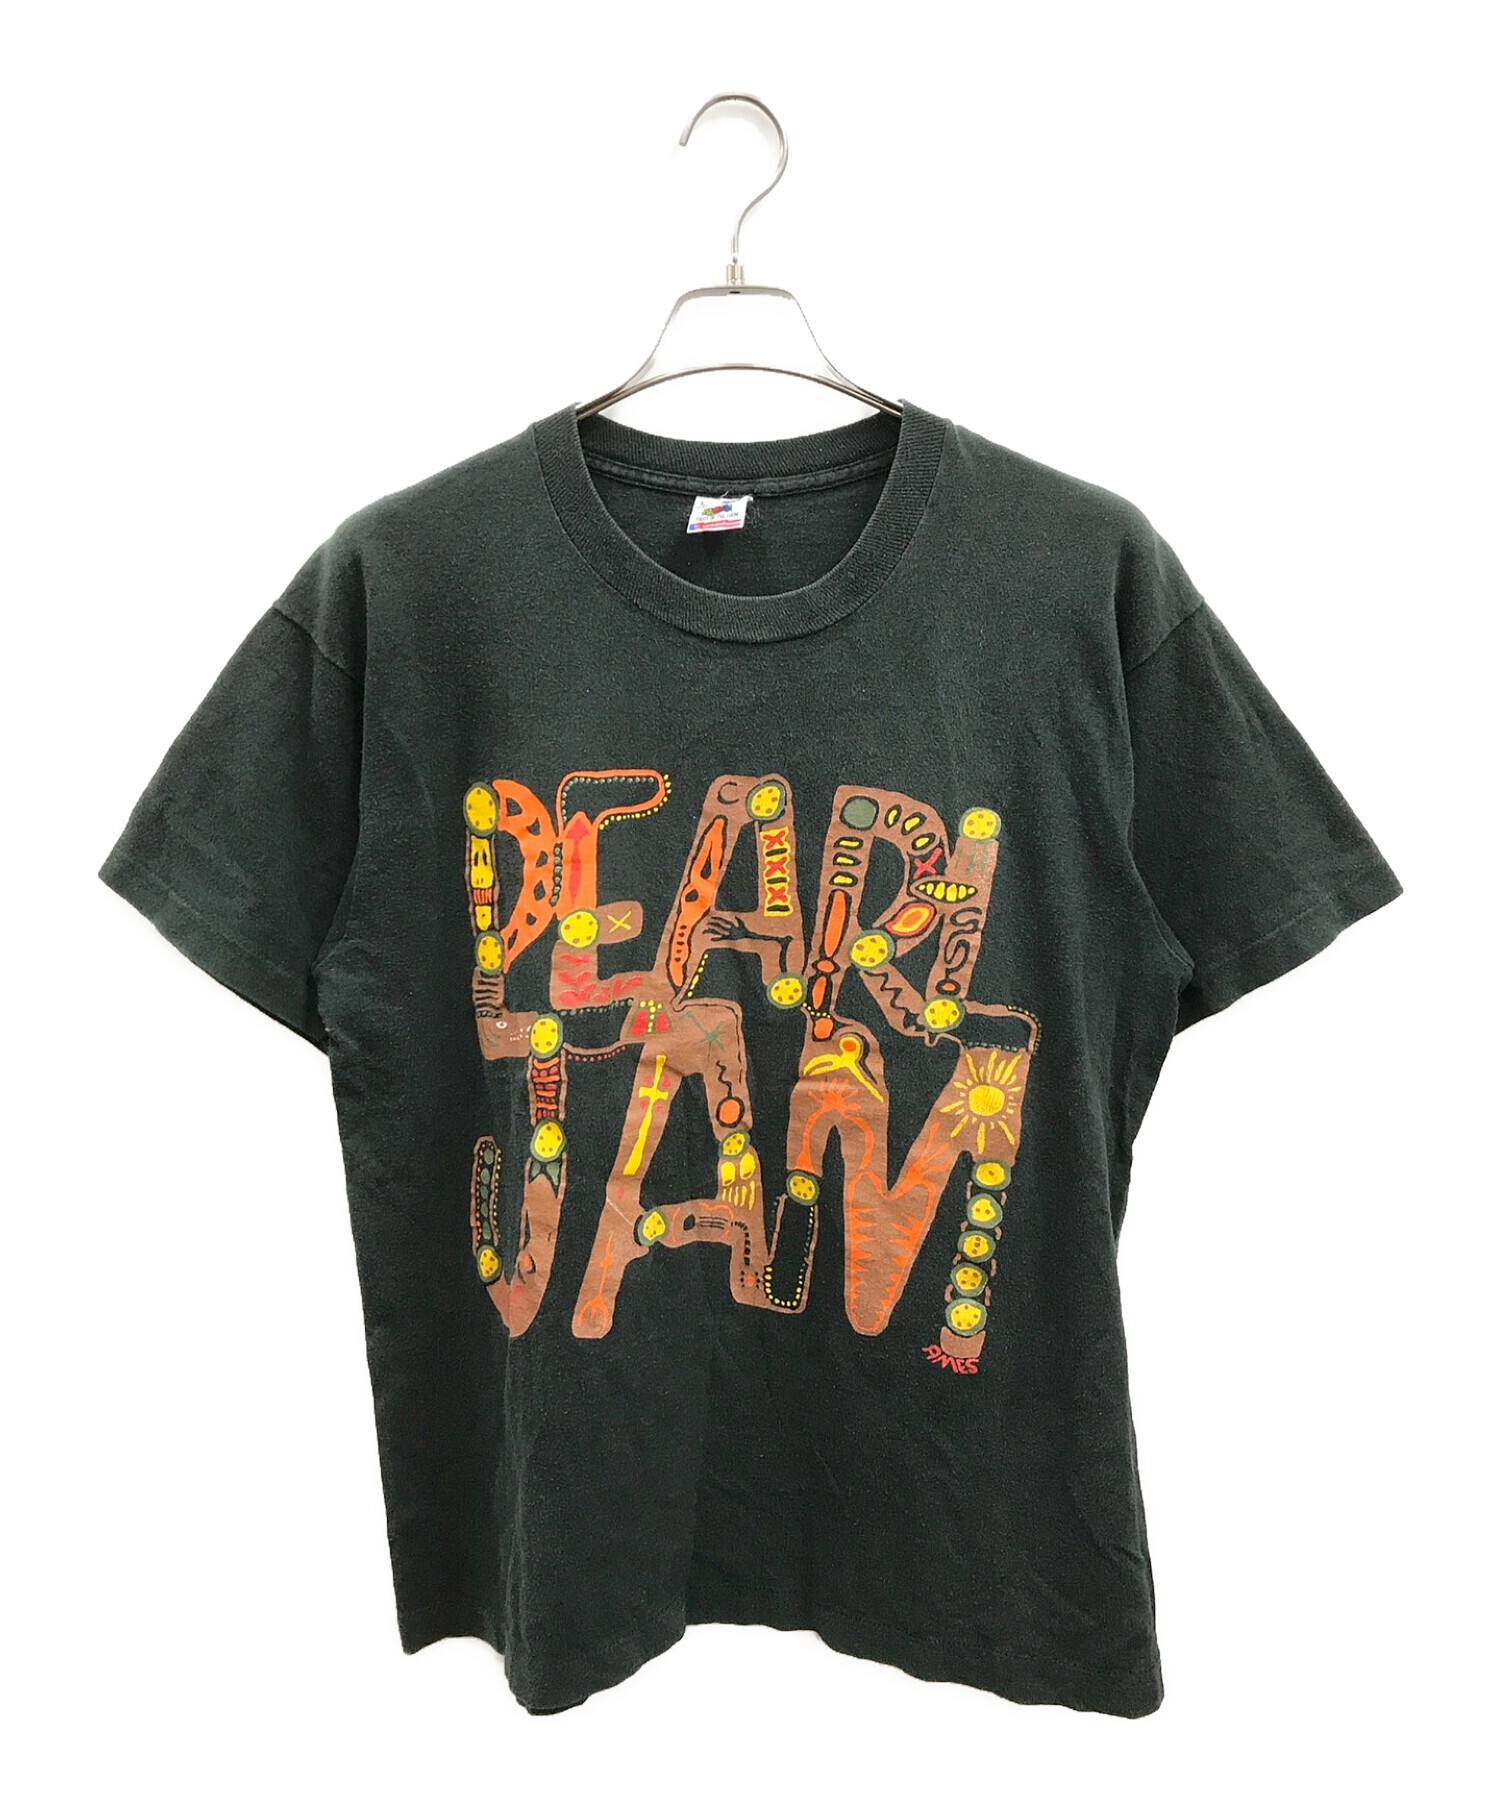 90s PEARL JAM CANDLES パールジャム ロックバンドTシャツ